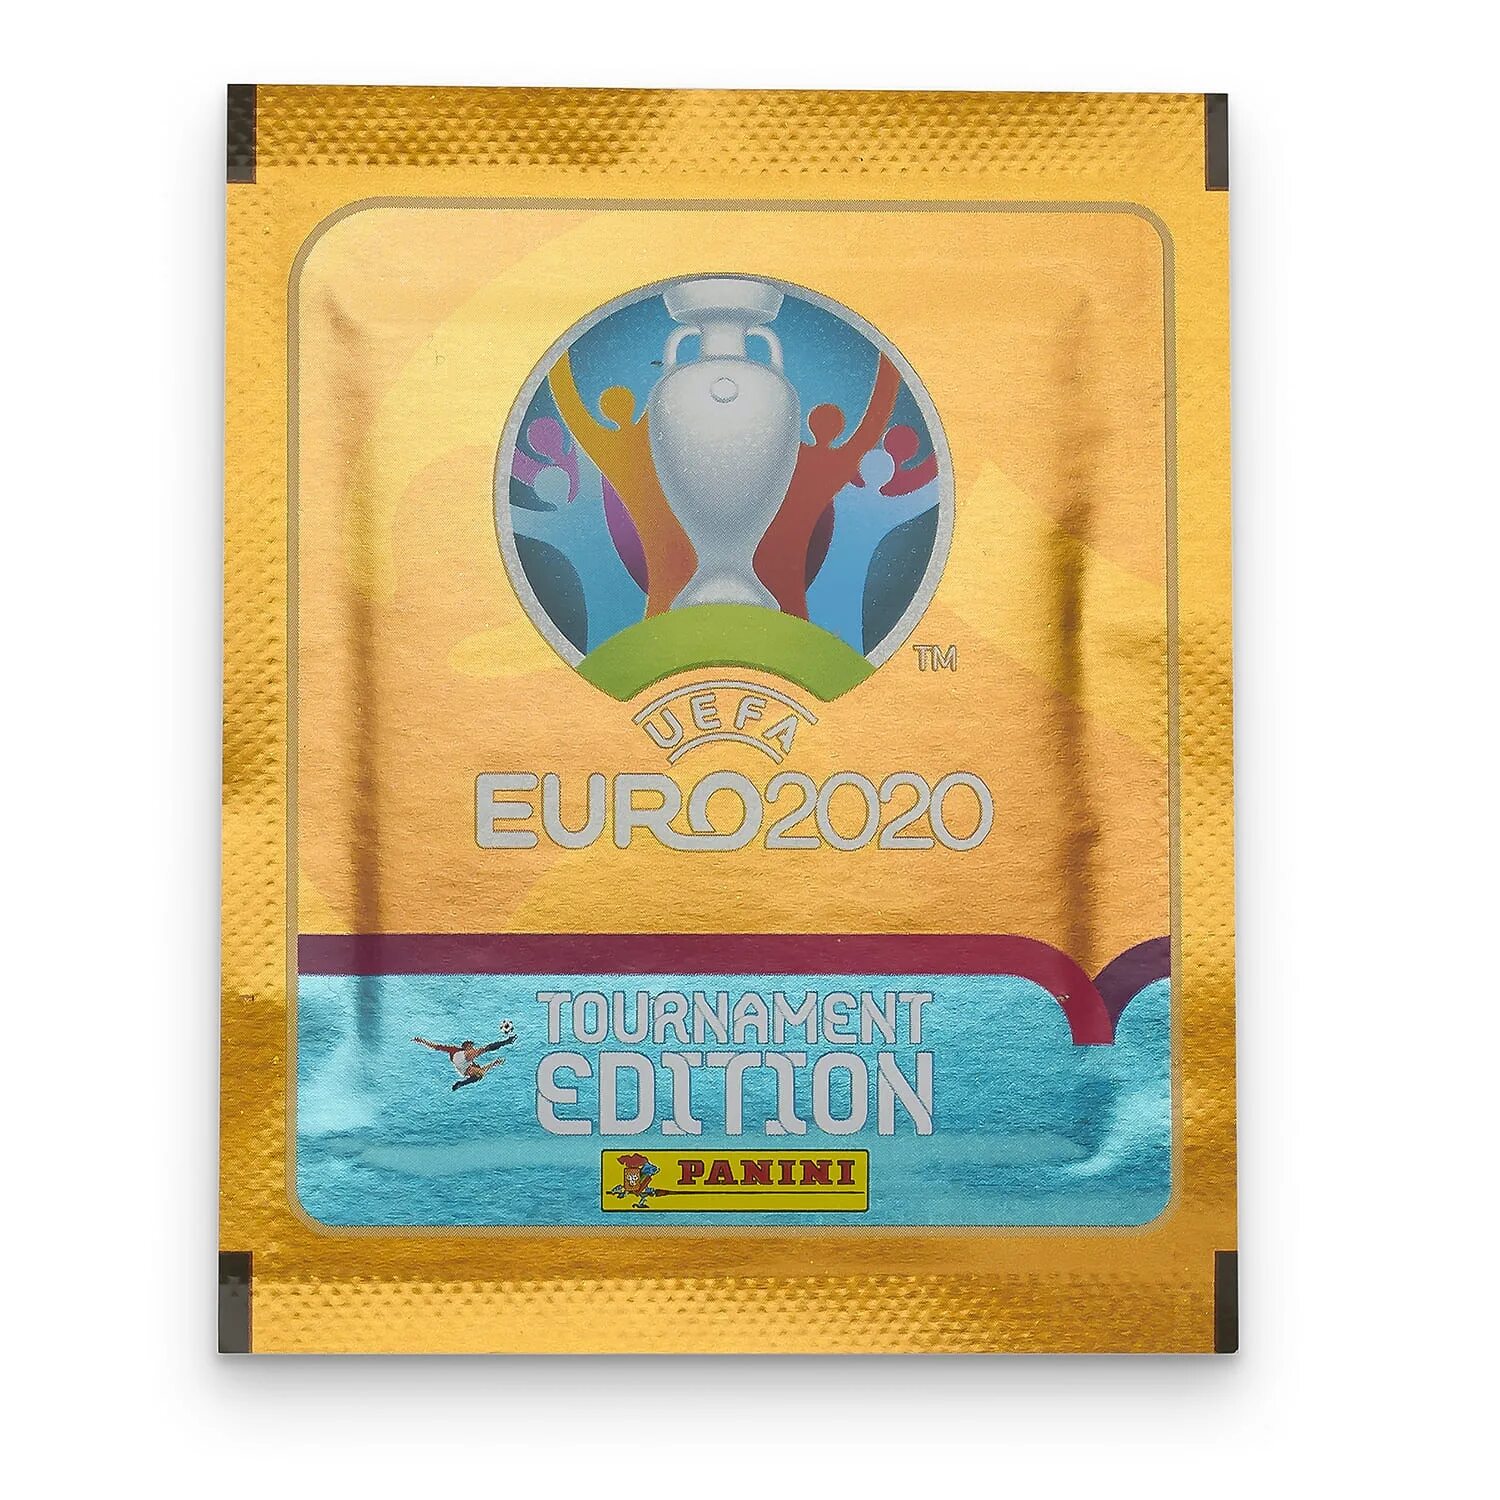 Евро наклейка. Panini наклейки Euro 2020. Наклейки УЕФА евро 2020 Панини. Panini 2020 наклейки. Евро 2020 альбом Panini.